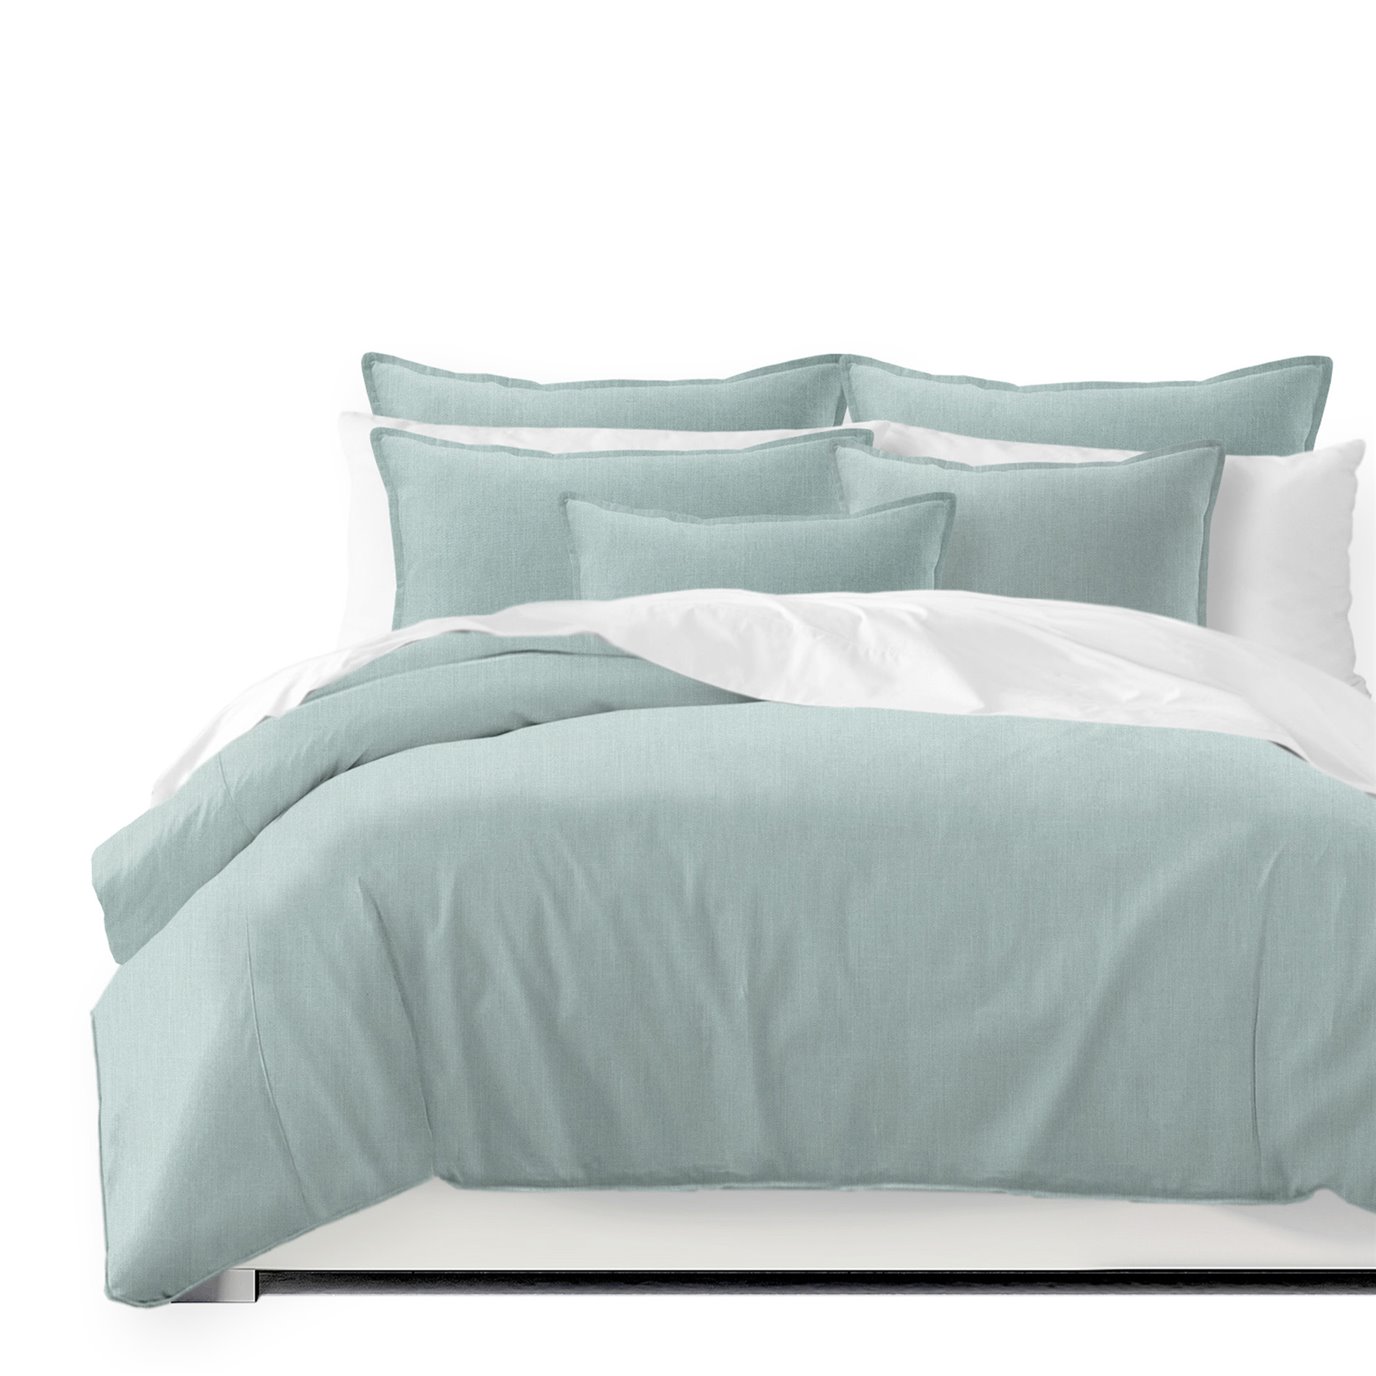 Sutton Aqua Mist Comforter and Pillow Sham(s) Set - Size Super Queen